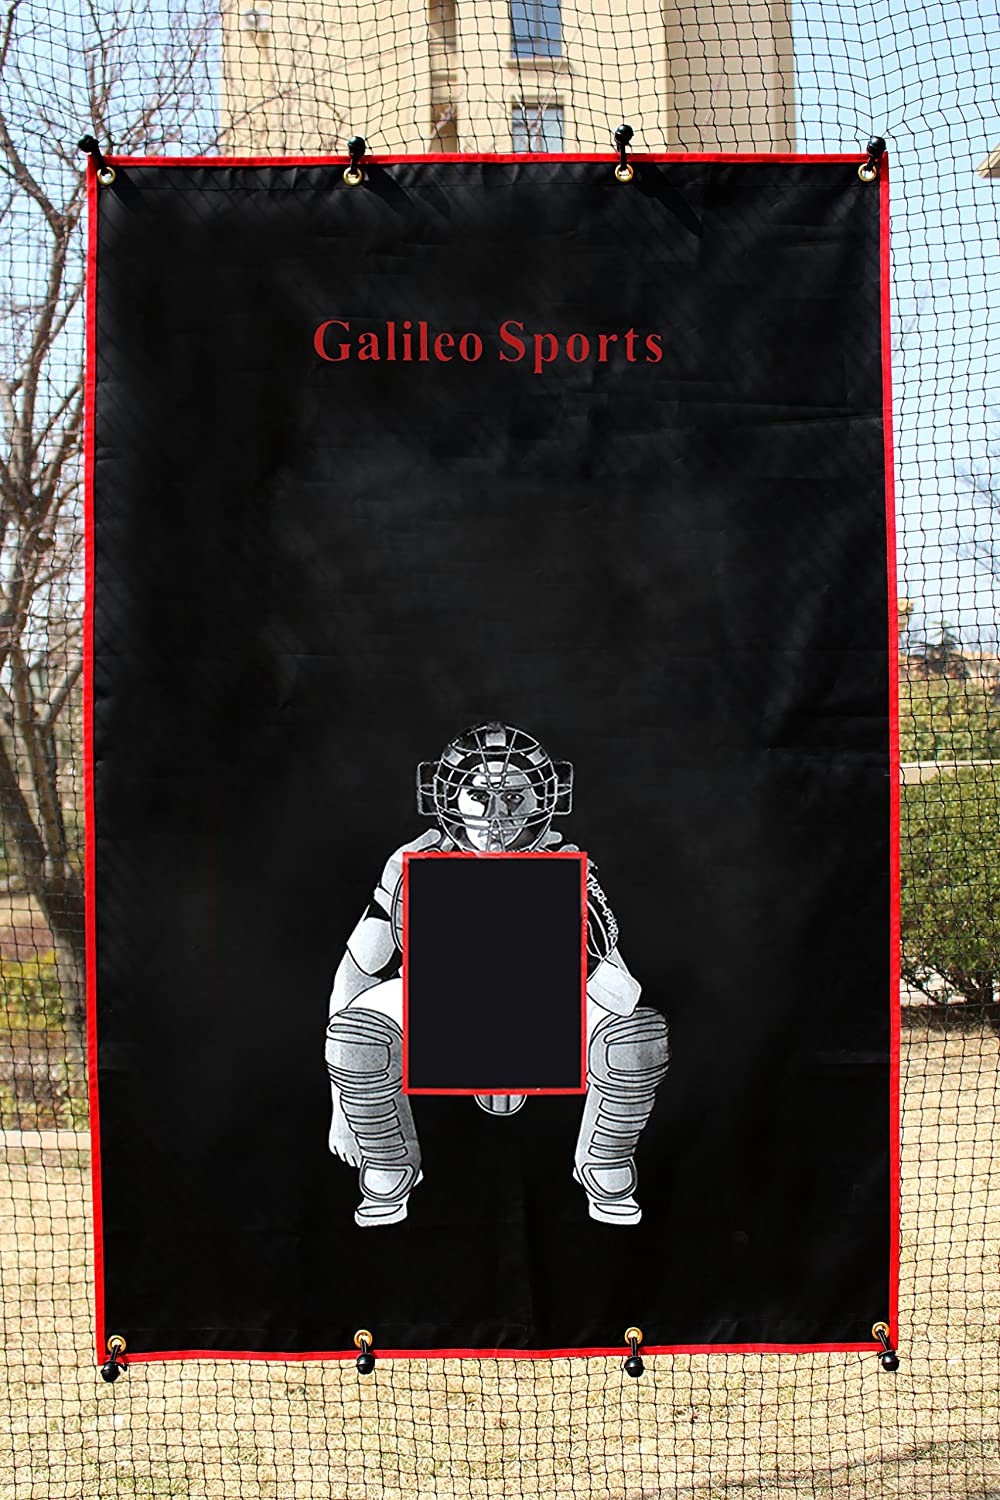 Galileo Softball Backstop Vinyl Heavy Duty Baseball Batting Cage Backstop Pitching Target Trainer Backstop Net Saver